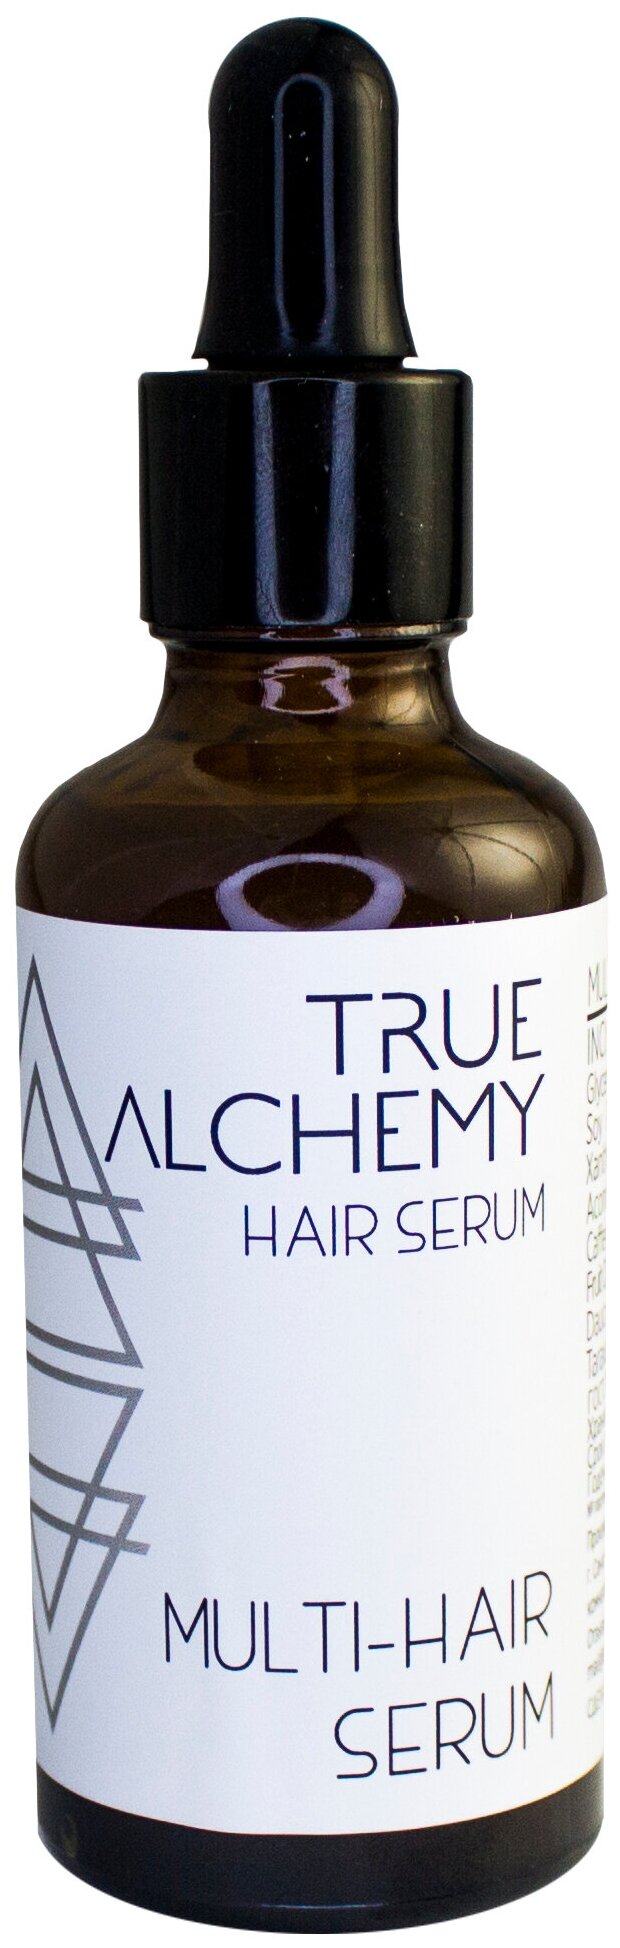 Сыворотка True Alchemy Multi-Hair Serum для волос, 50мл - фото №4